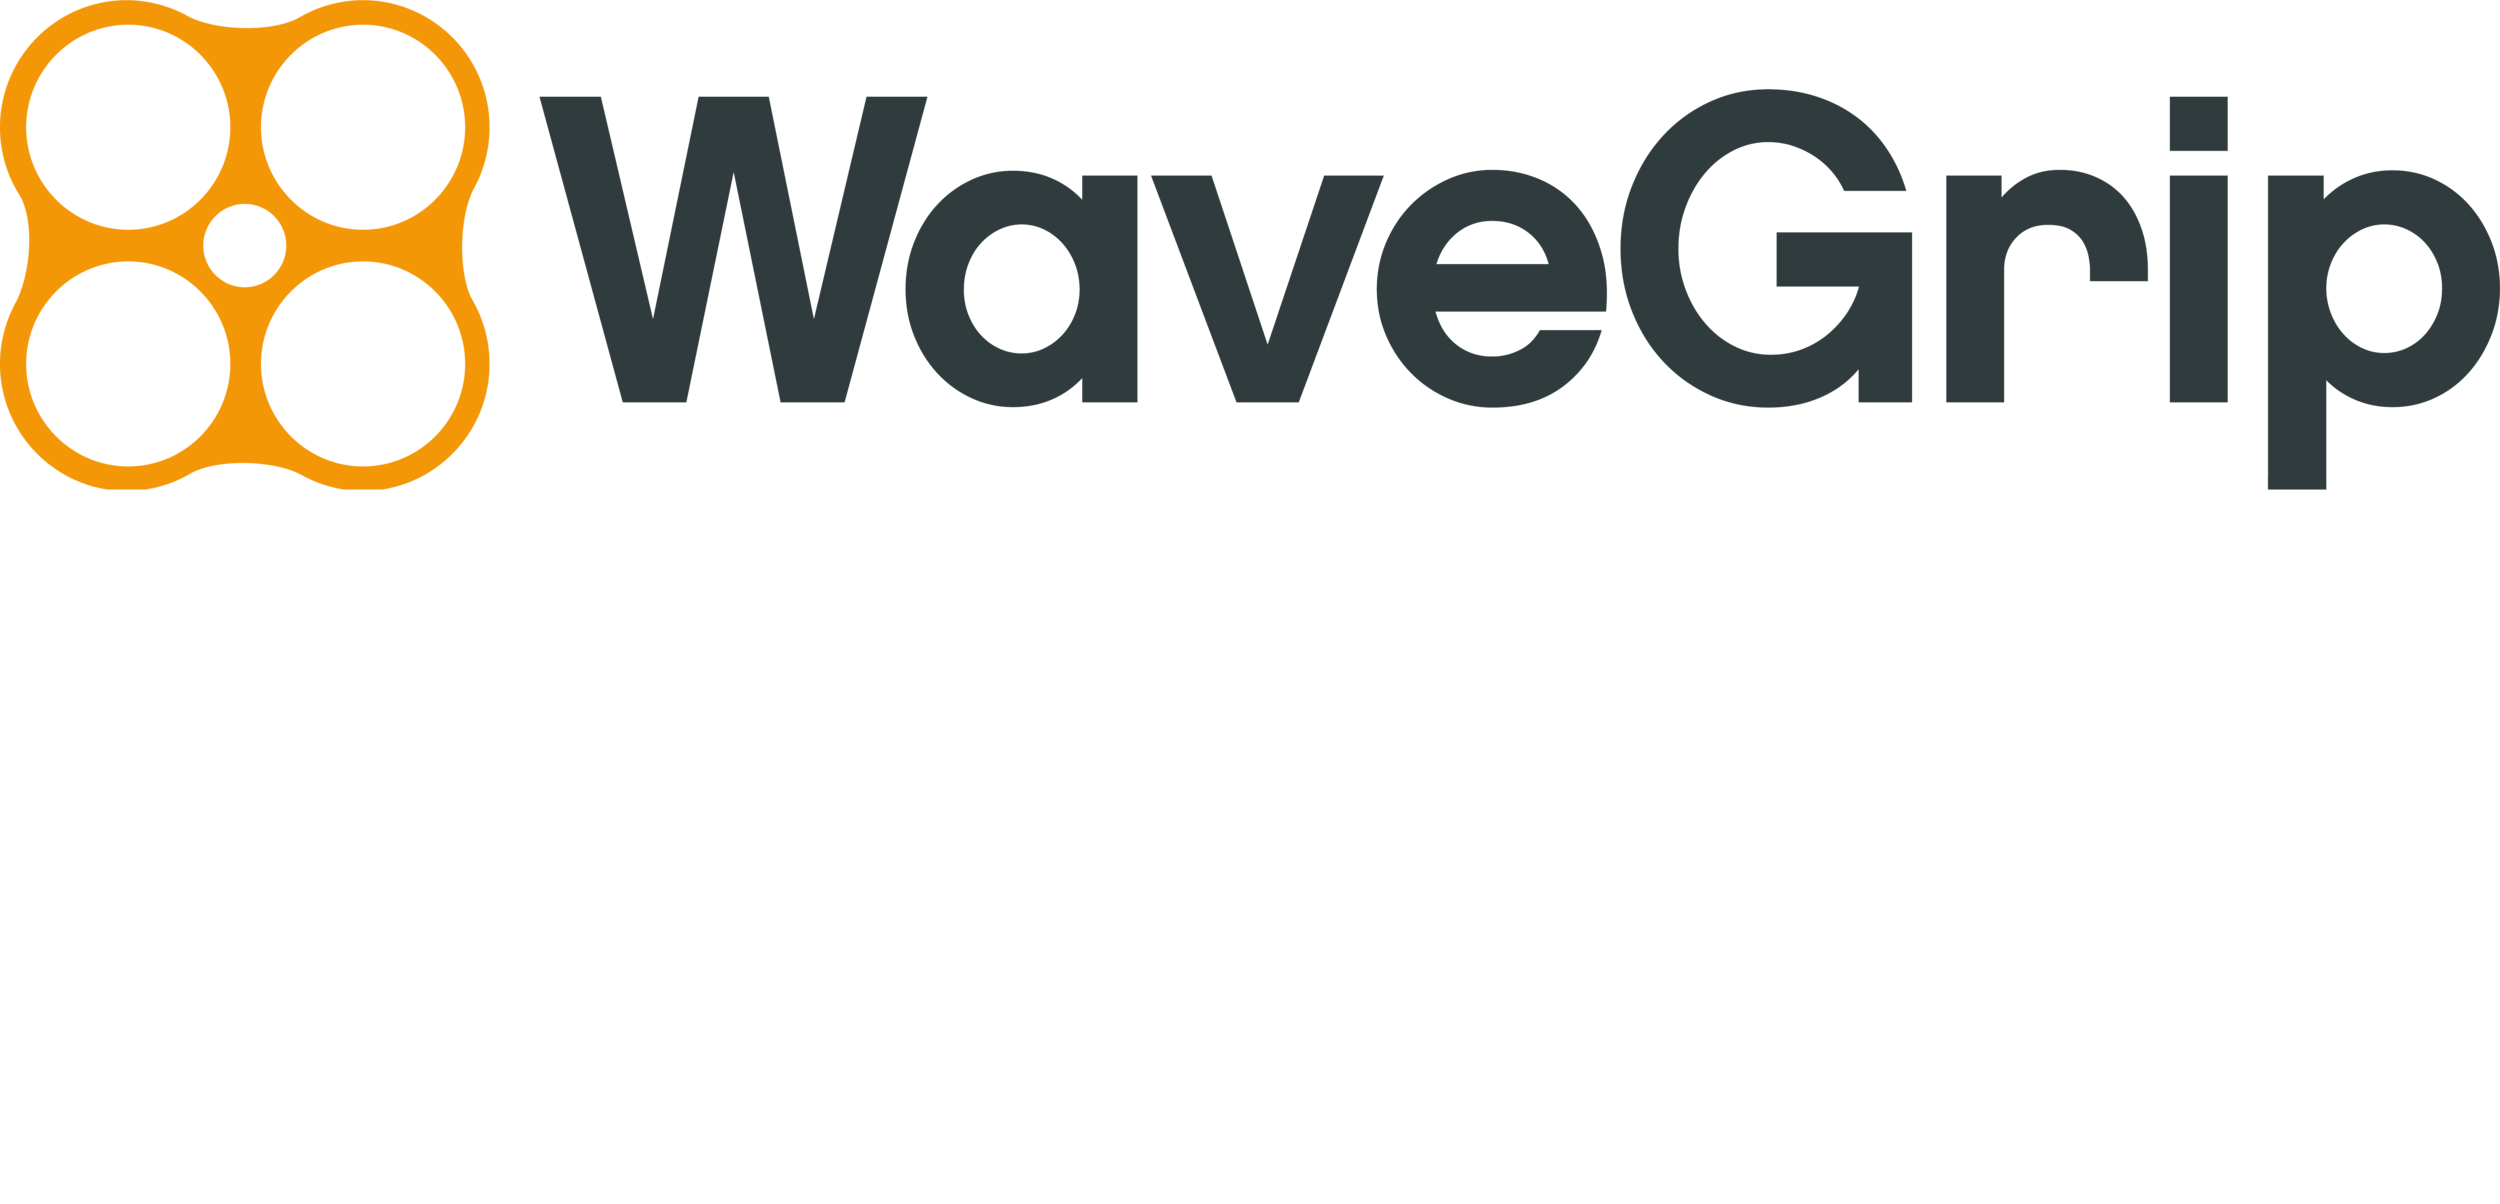 Wavegrip logo reflection.png